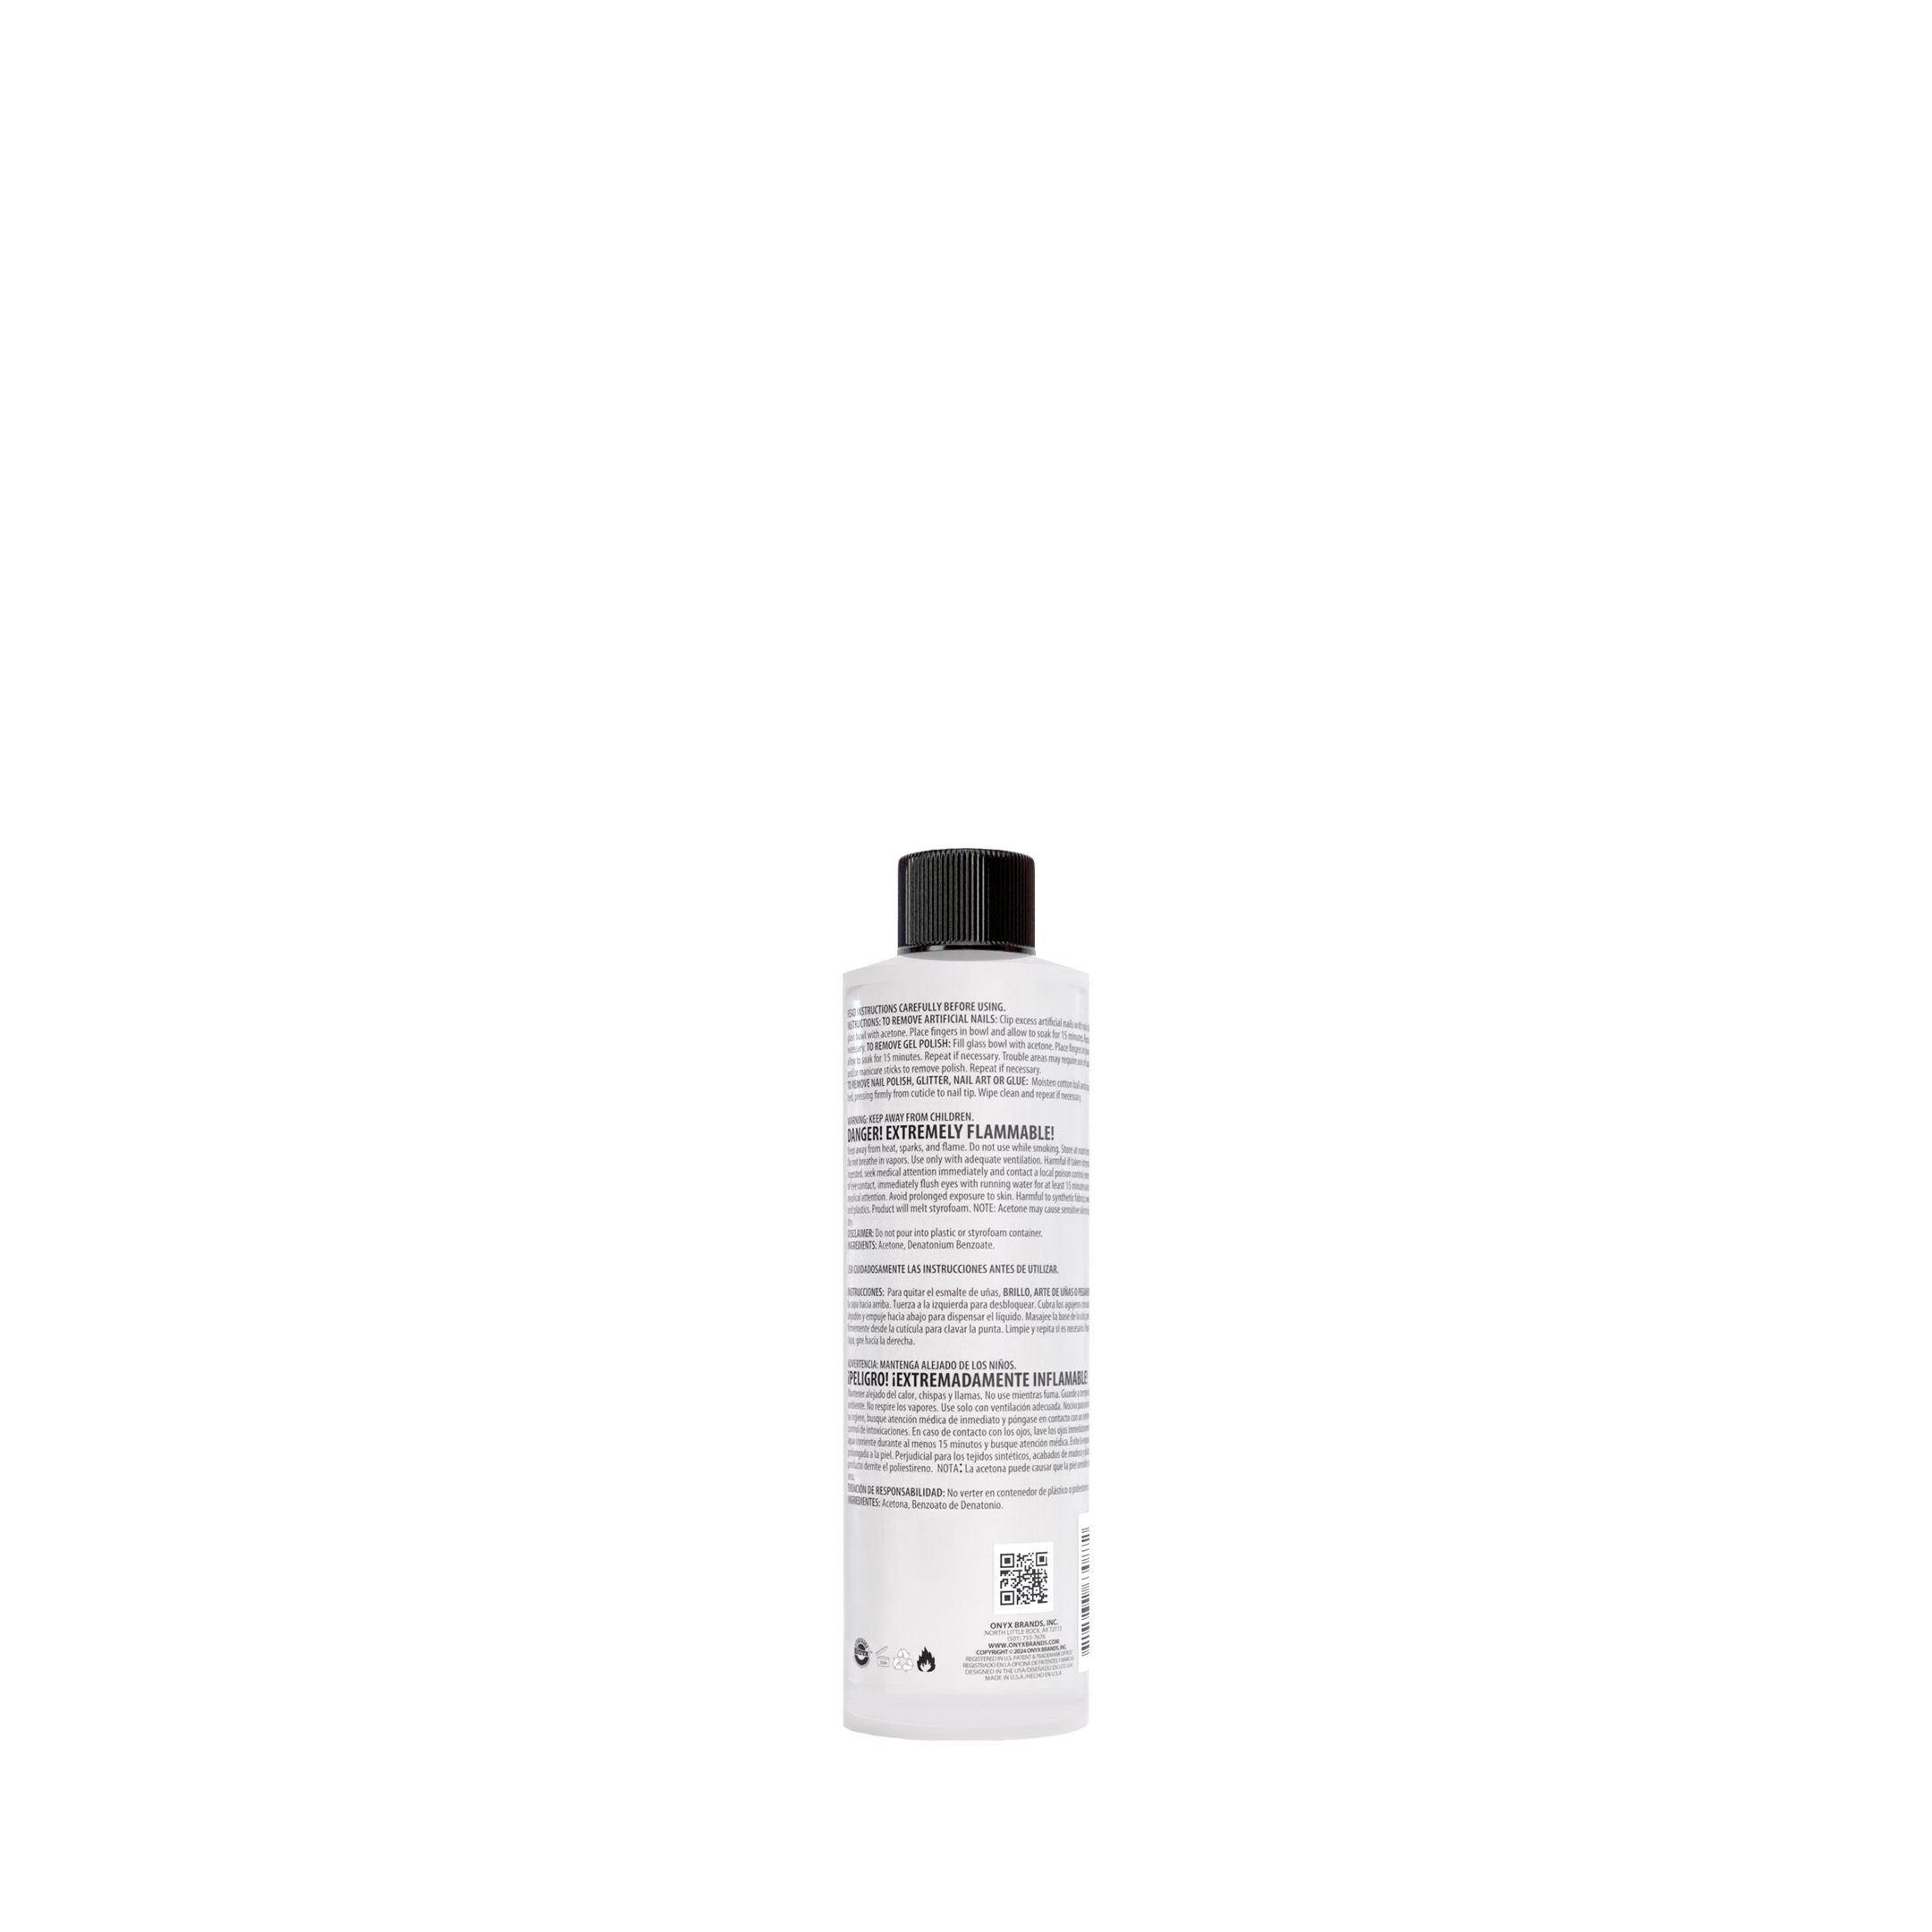 Onyx Professional 100% Pure Acetone Nail Polish Remover, 4 fl oz - image 4 of 5